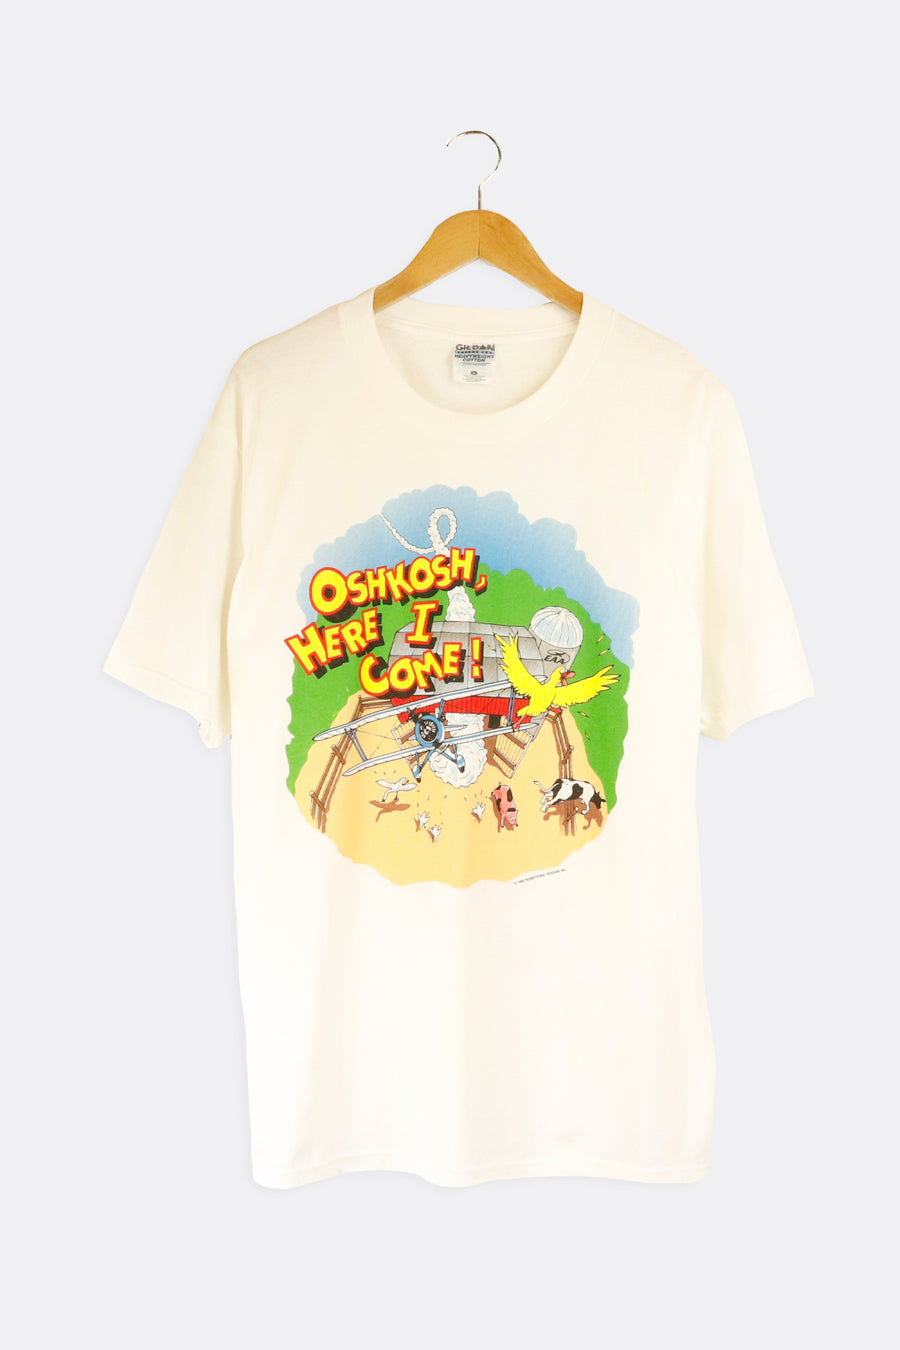 Vintage 1998 Oshkosh Here  Come Graphic T Shirt Sz L